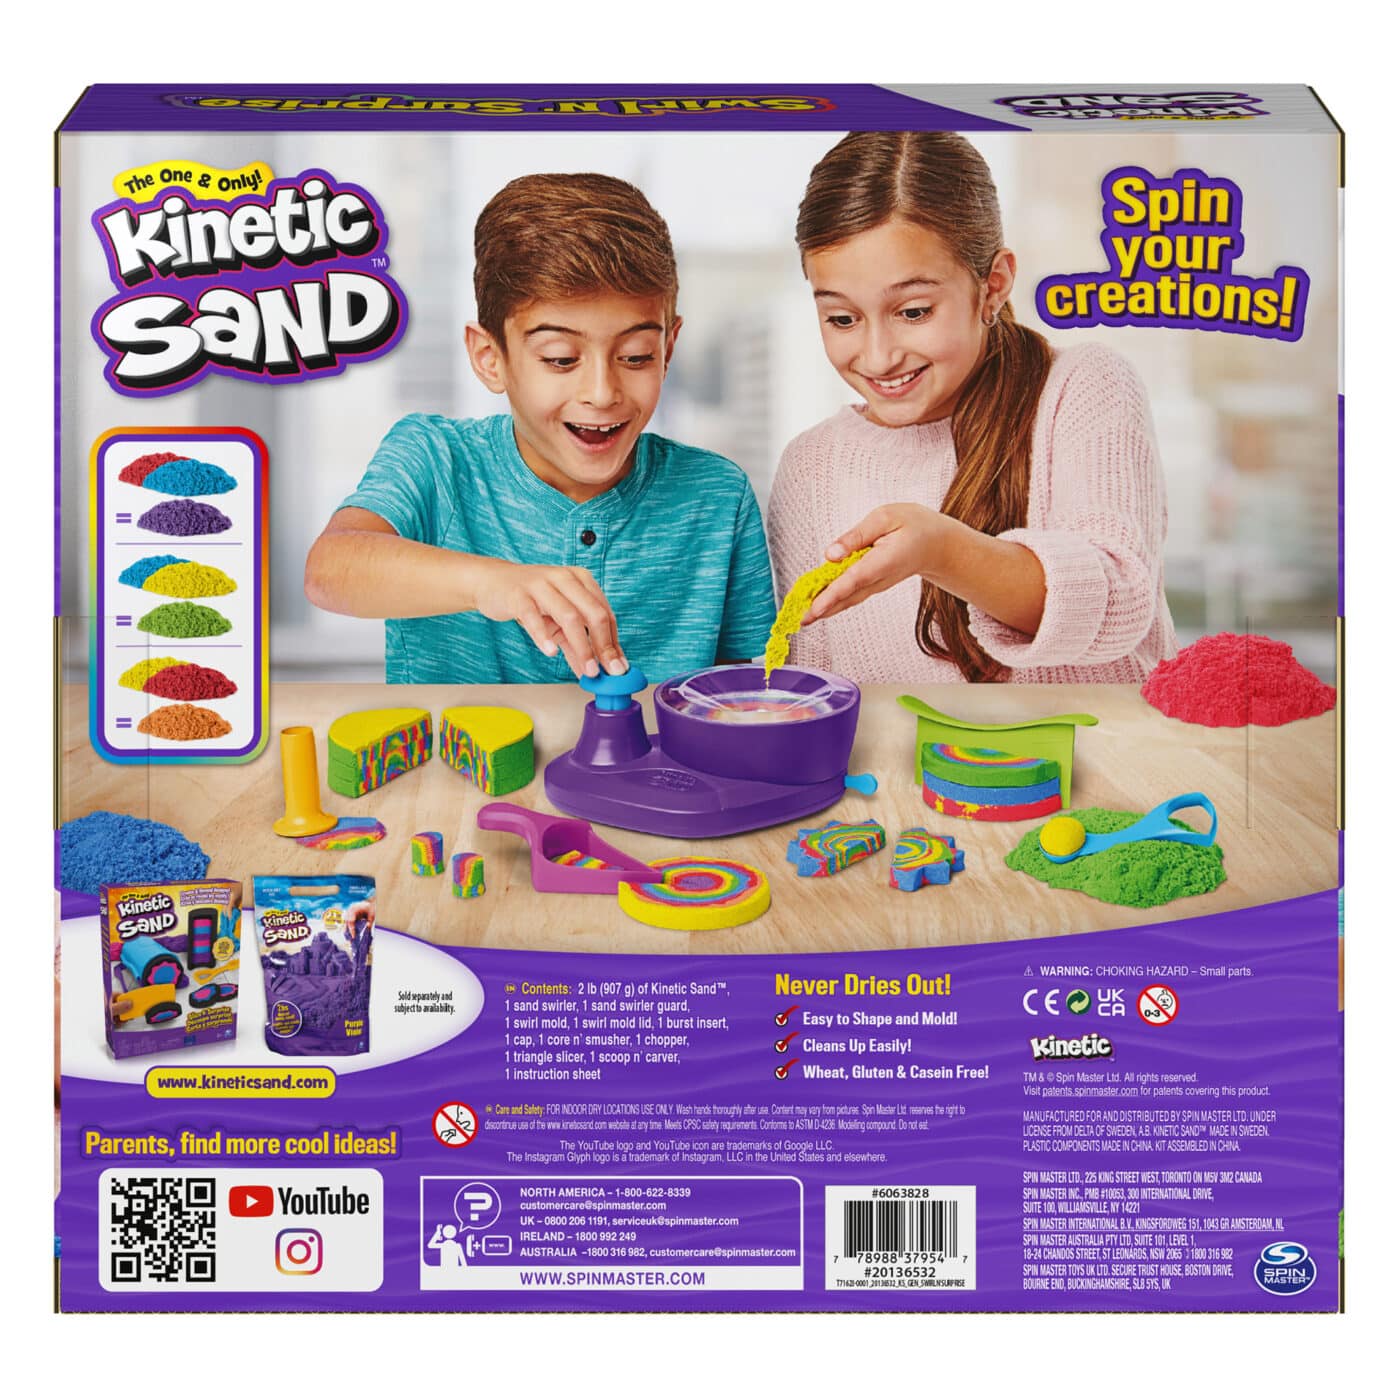 Kinetic Sand Swirl N' Surprise Playset